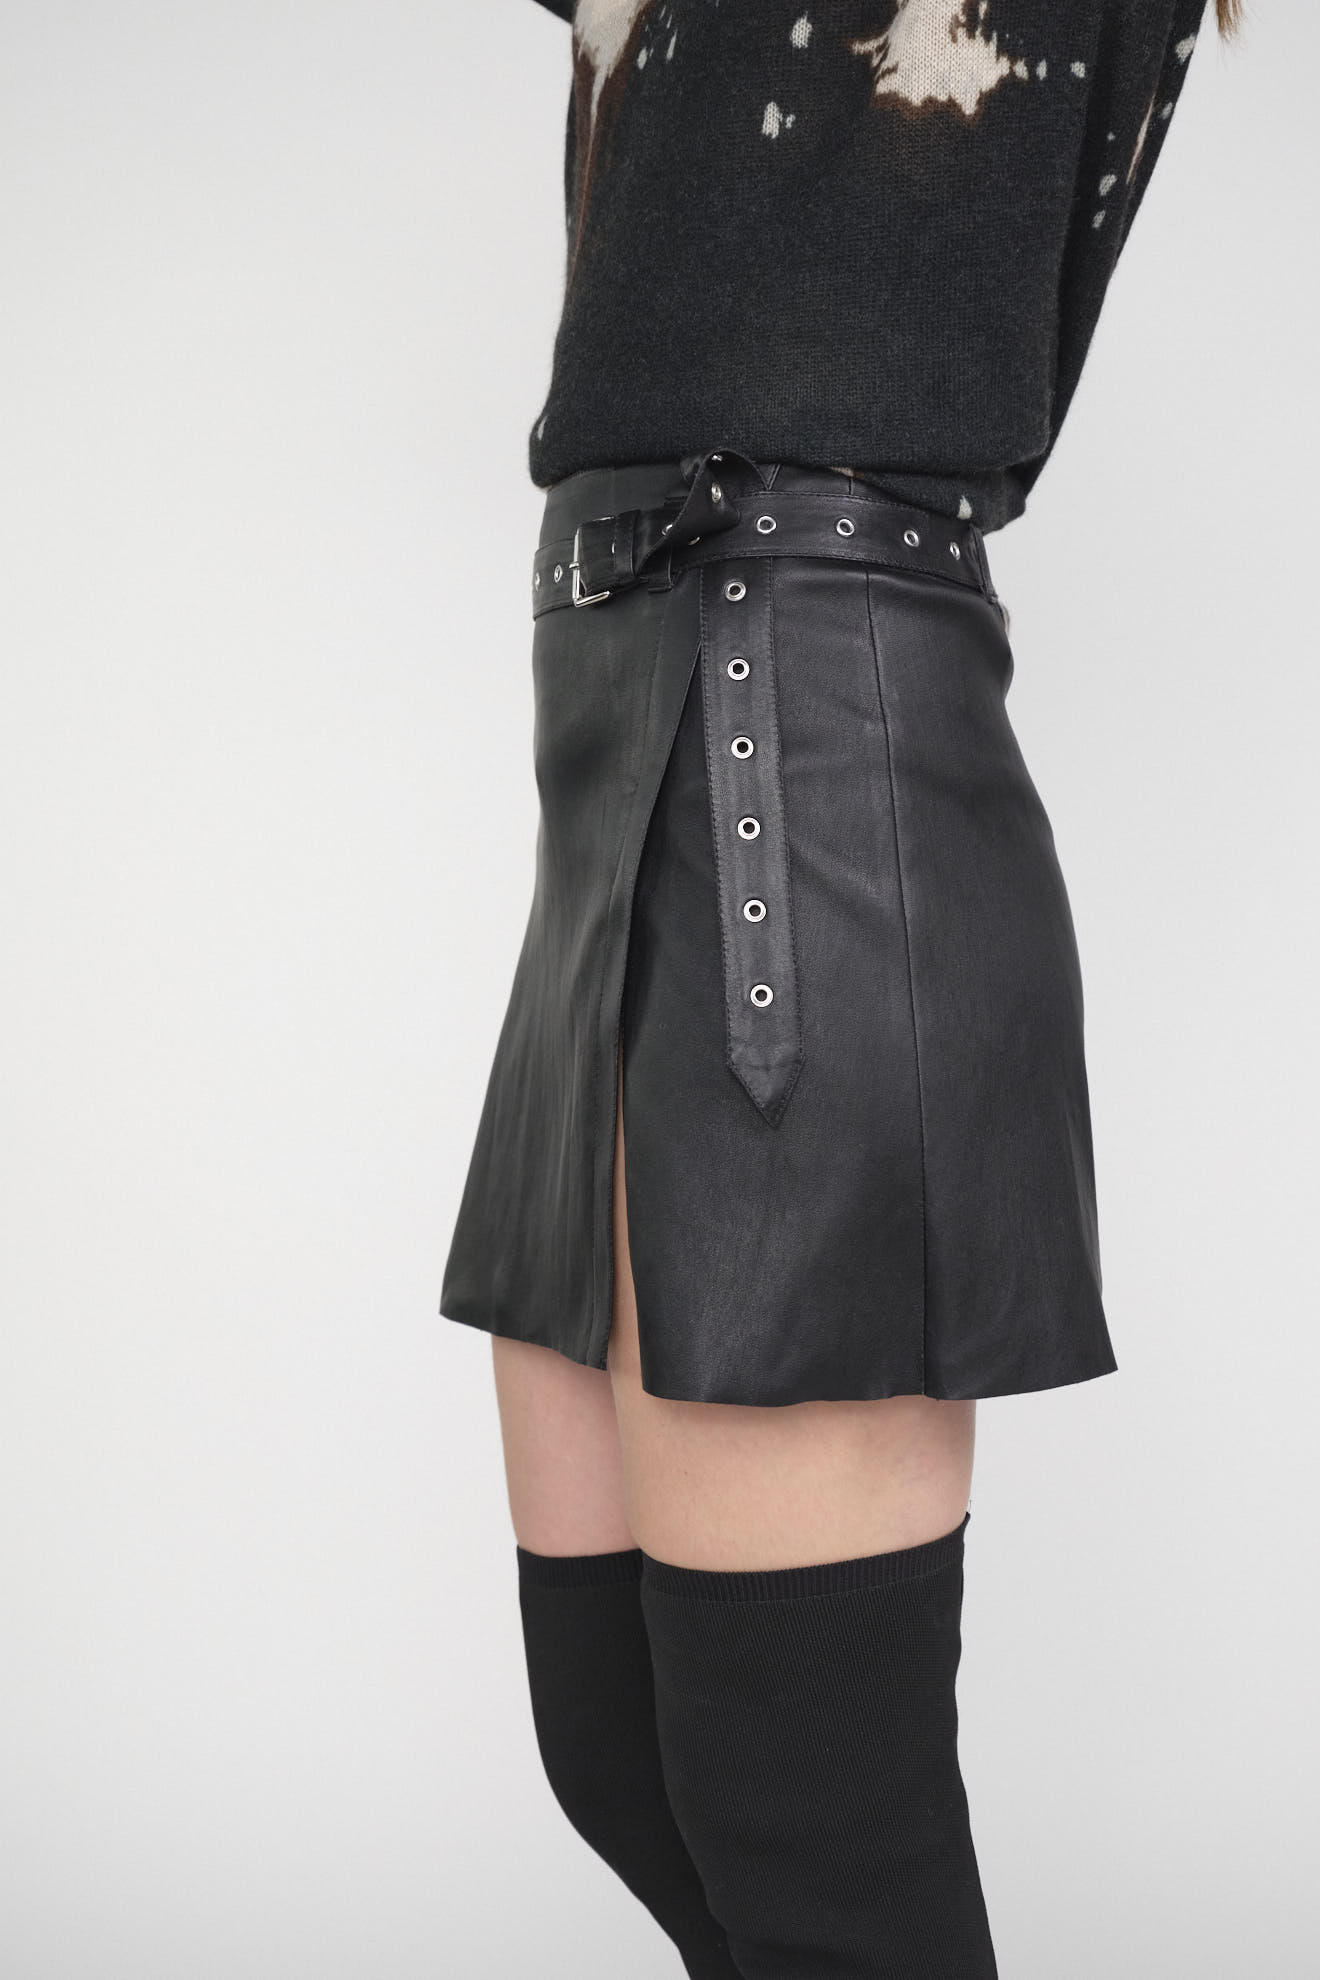 jitrois skirt black buttoned leather